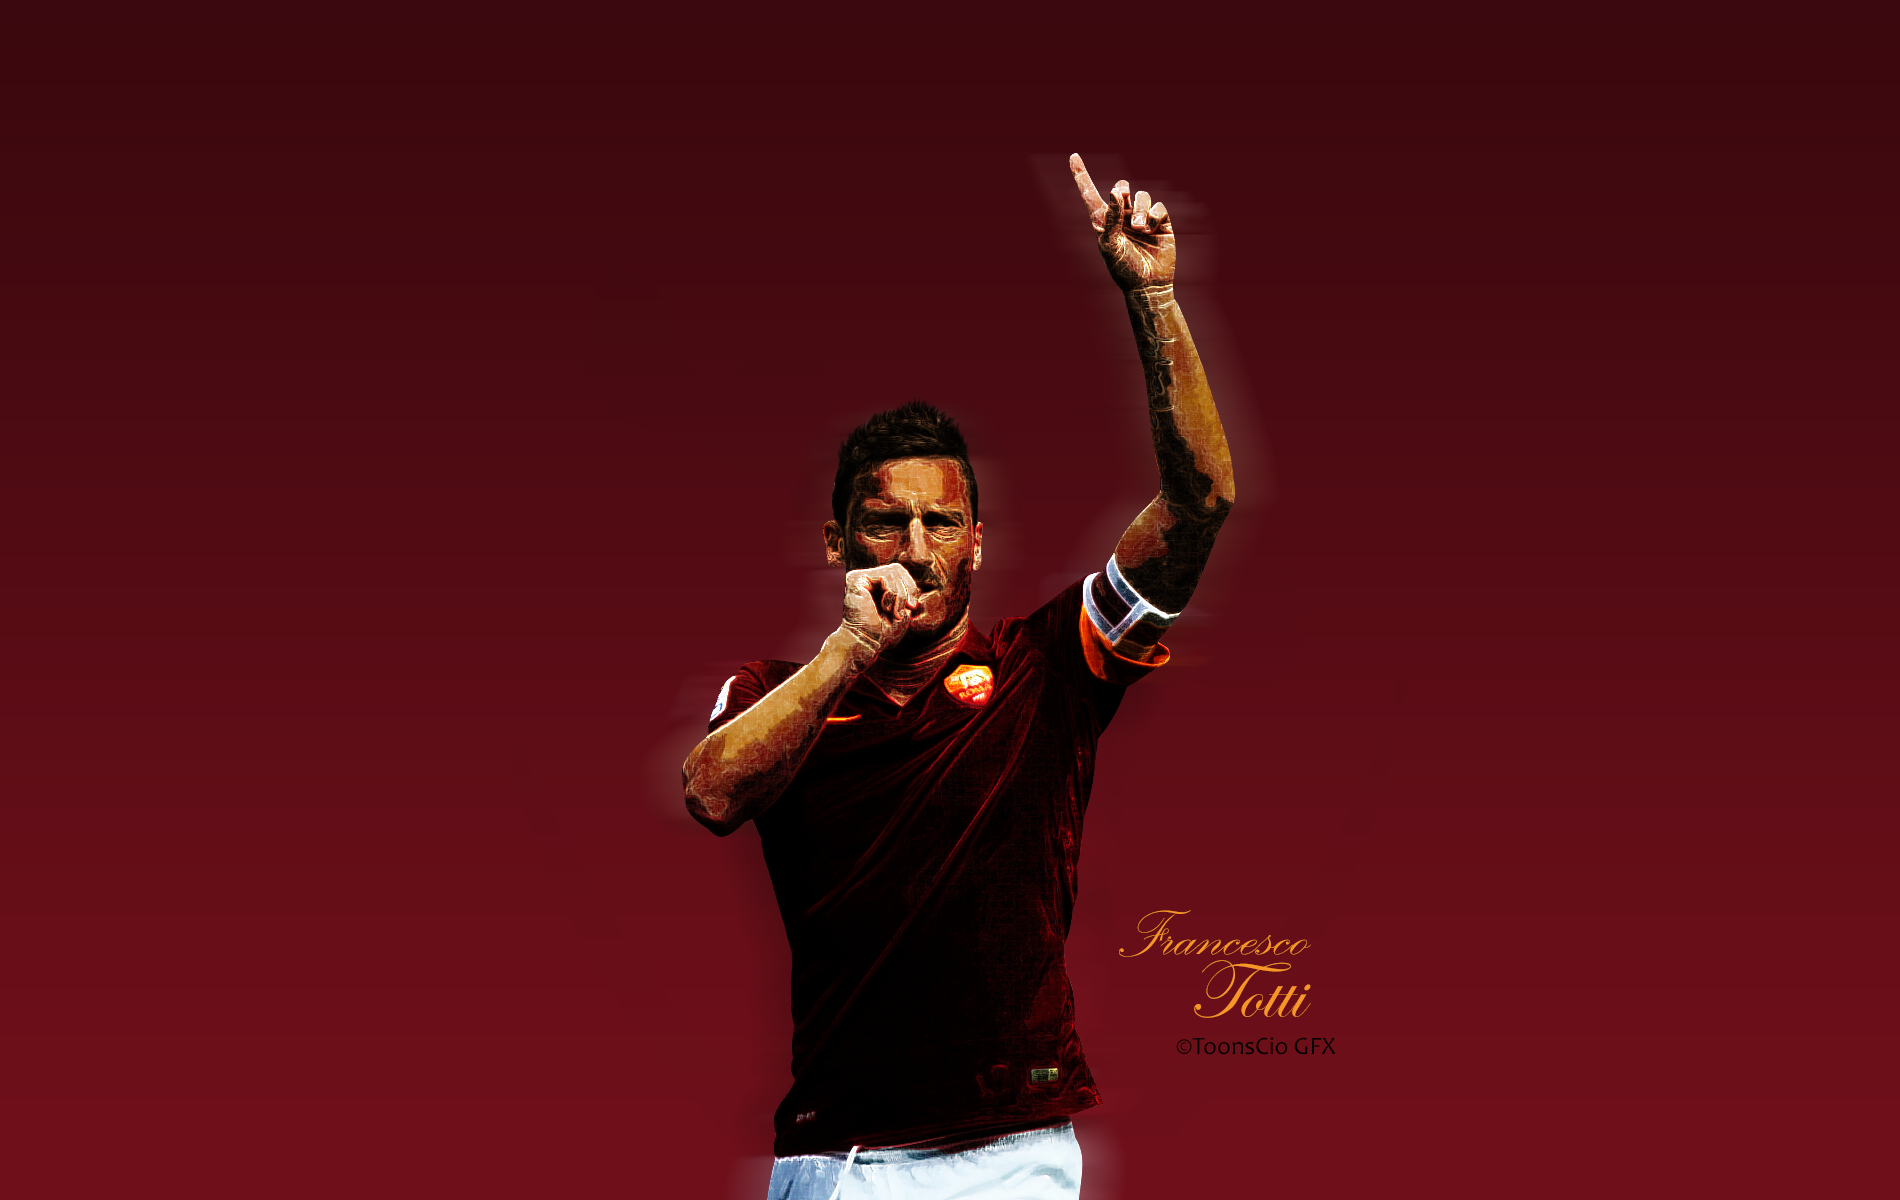 Francesco Totti By Toonscio